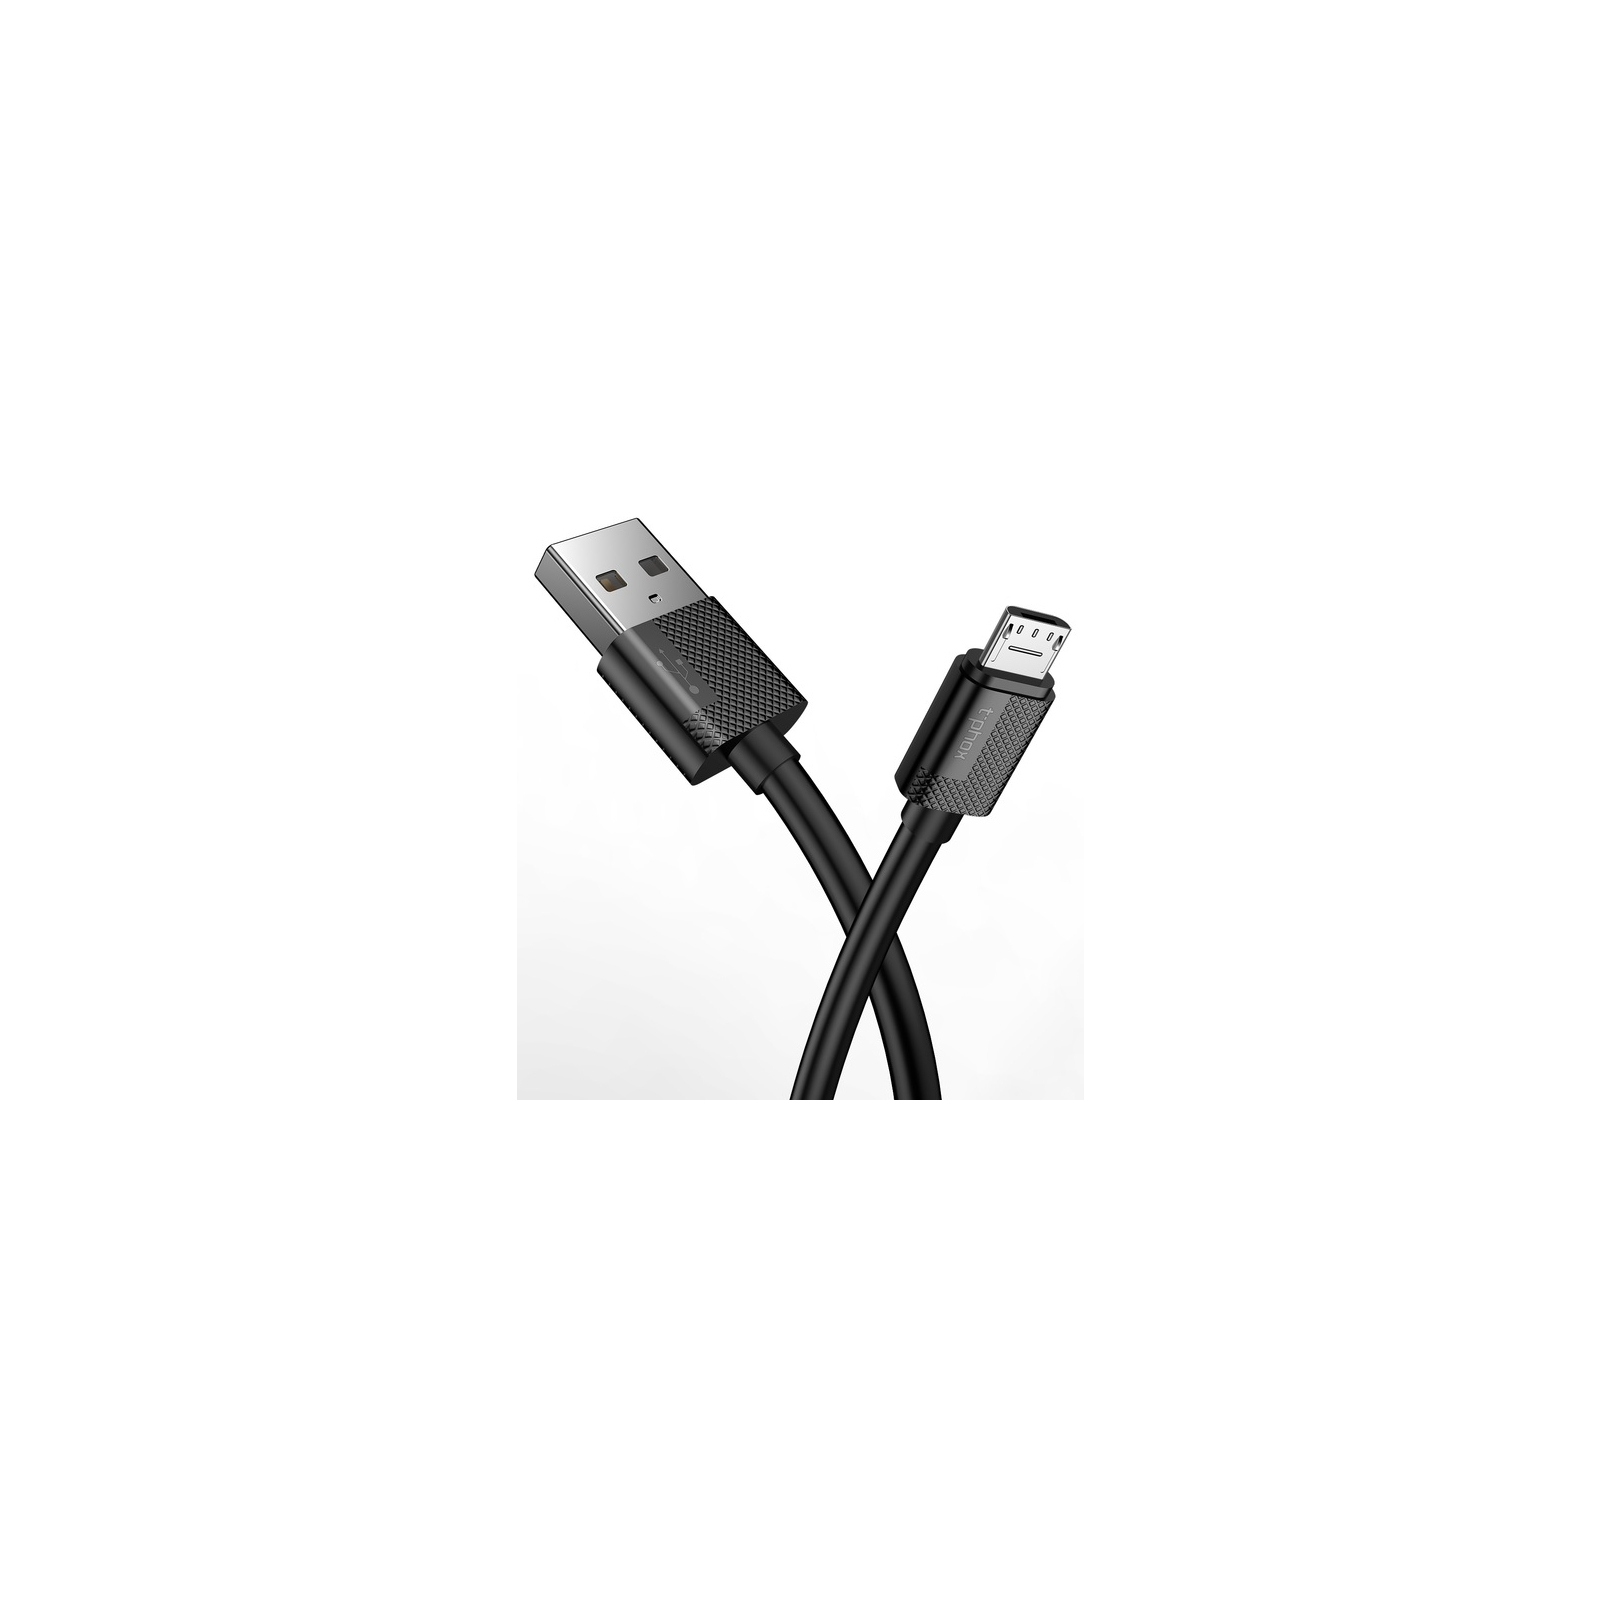 Дата кабель USB 2.0 AM to Micro 5P 0.3m Nets T-M801 Black T-Phox (T-M801 Black)